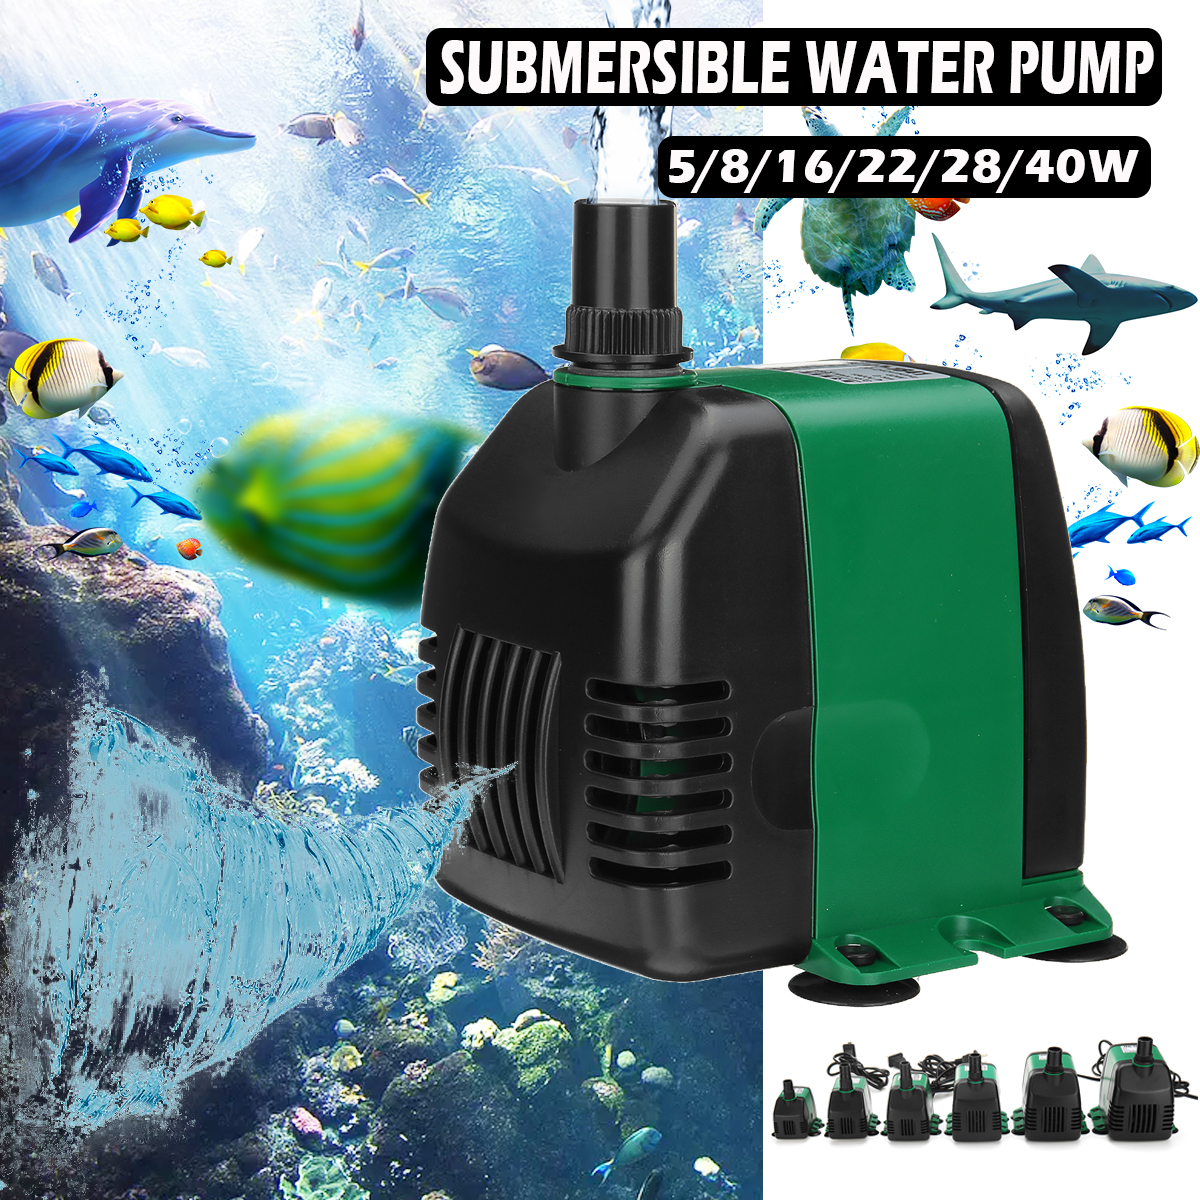 5816222840W-Submersible-Water-Pump-Low-Noise-Durable-Aquarium-Fish-Tank-Fountain-Pump-1573799-1